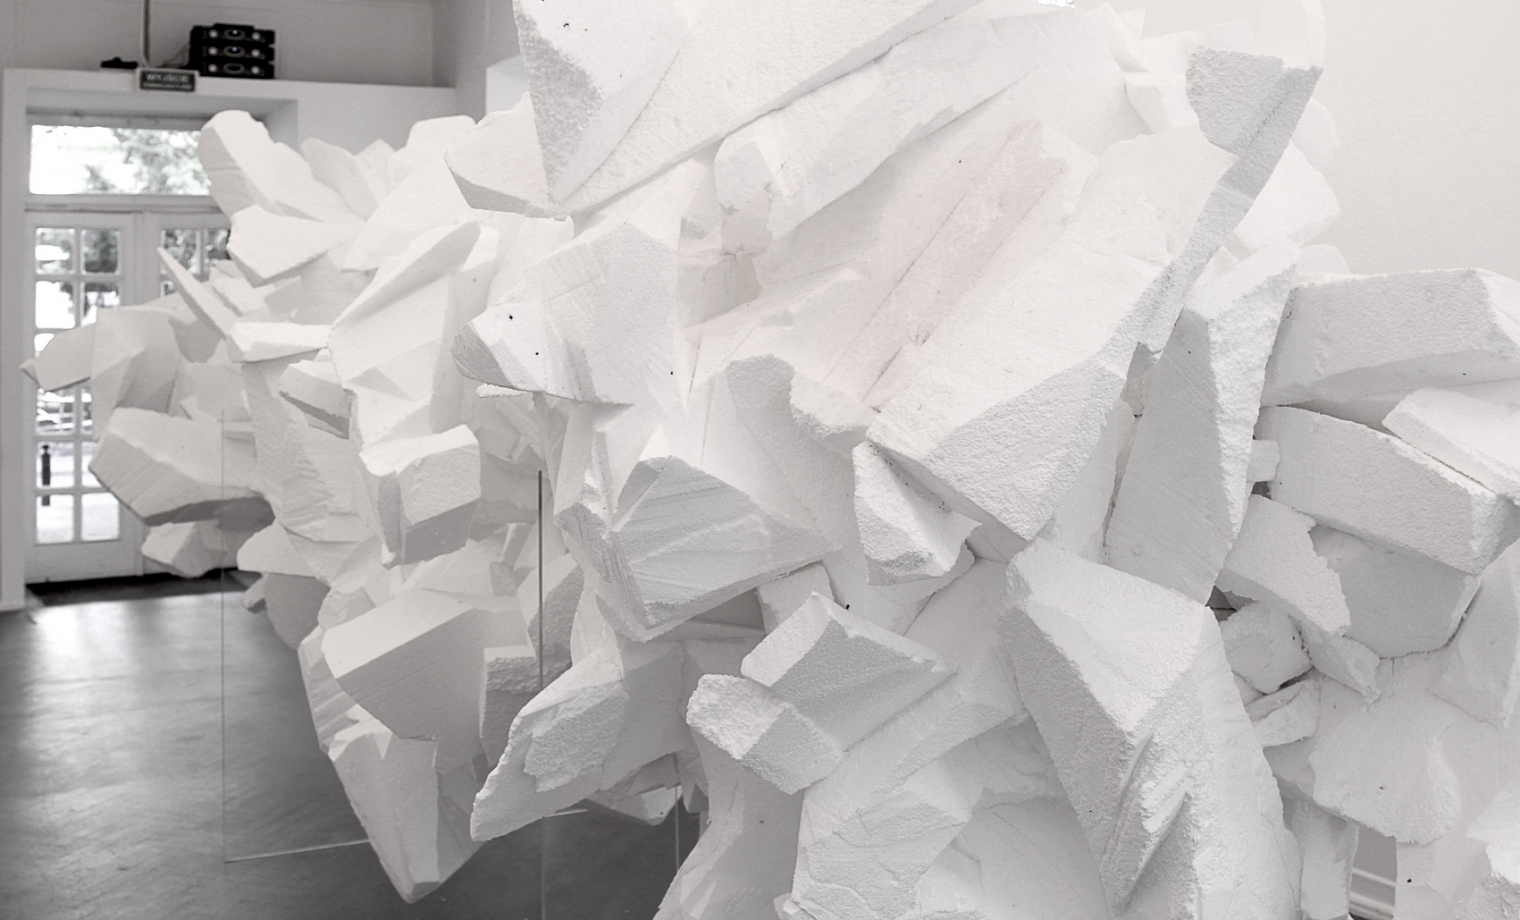 CATERPILLAR  Material: styrofoam, steel, pleksiglas; Dimension: 670 x 280 x 280 cm; Date: 2018